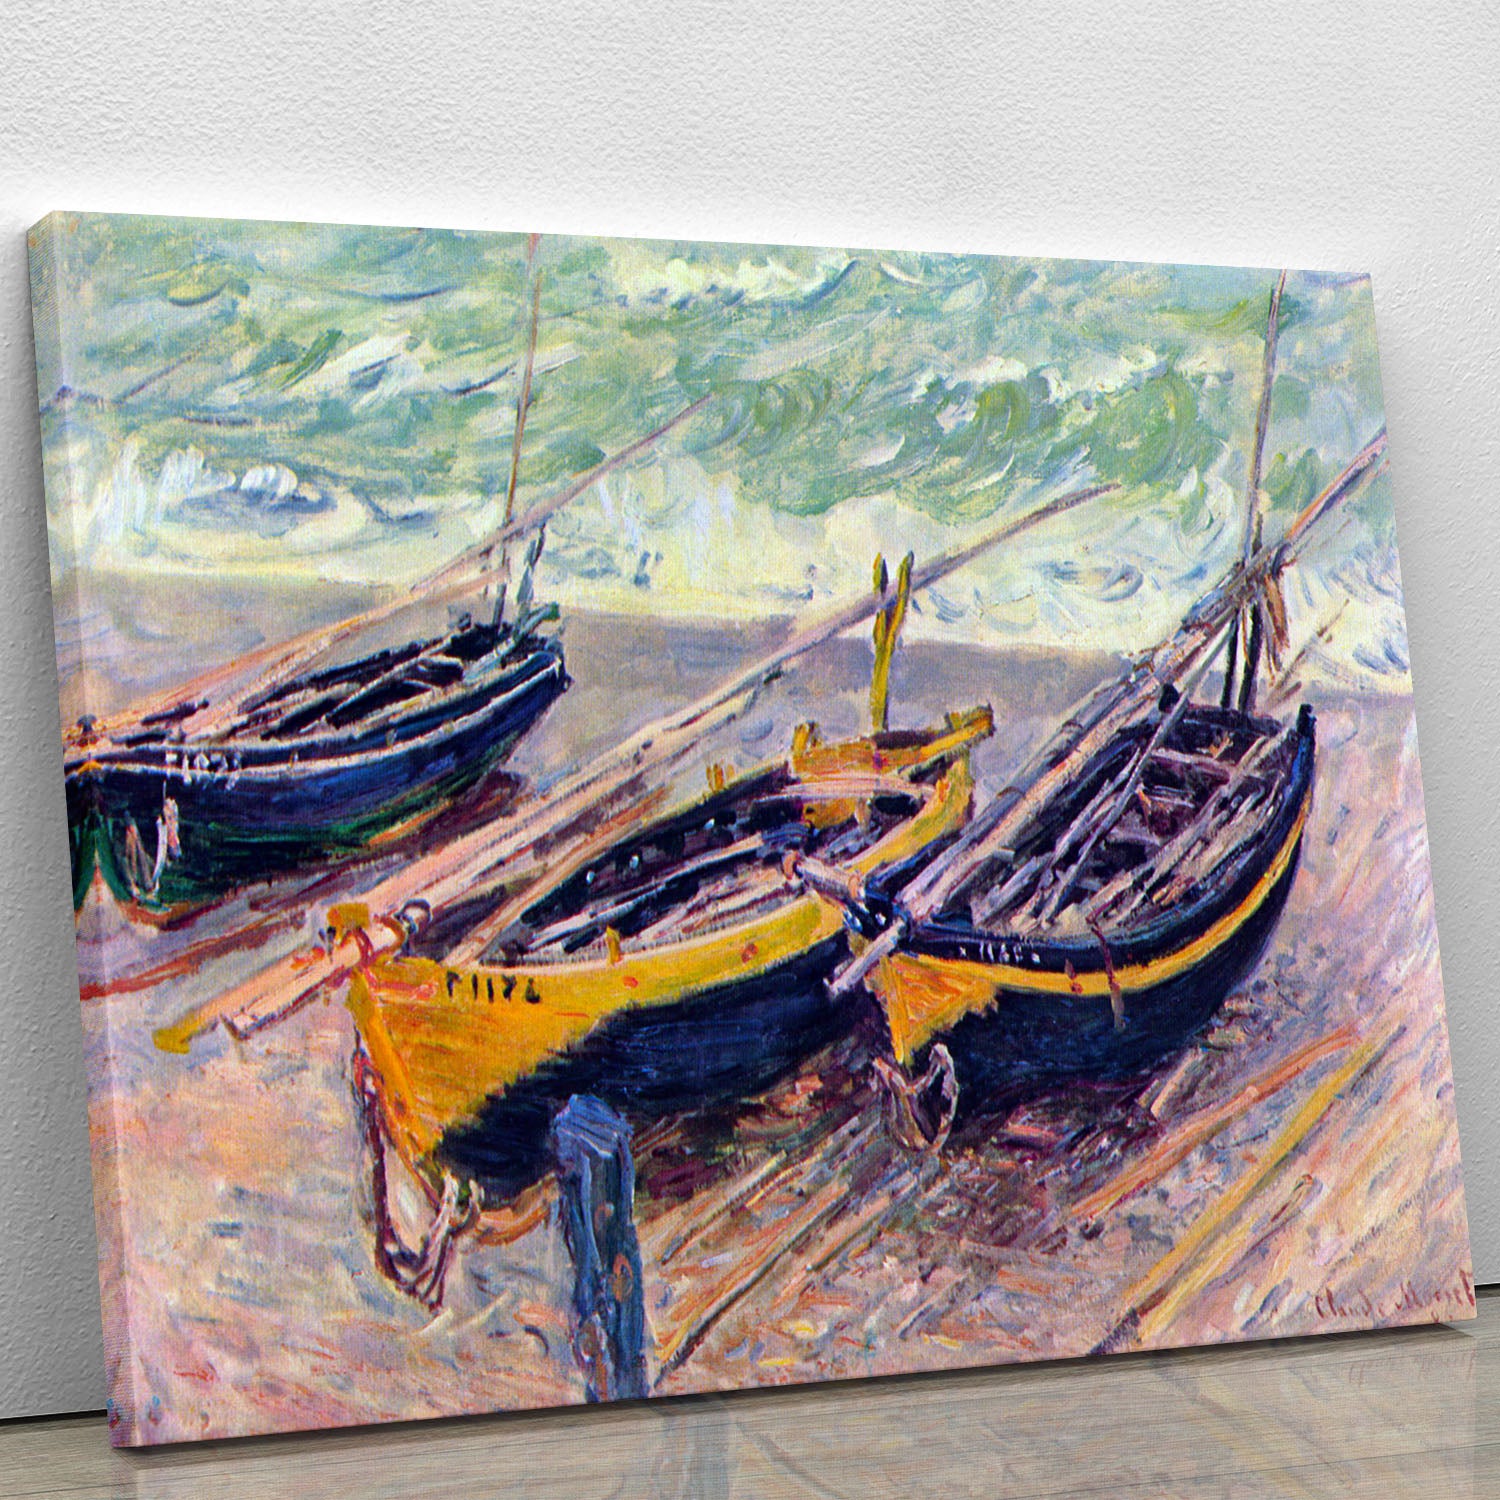 Dock of etretat three fishing boats by Monet Canvas Print or Poster - Canvas Art Rocks - 1